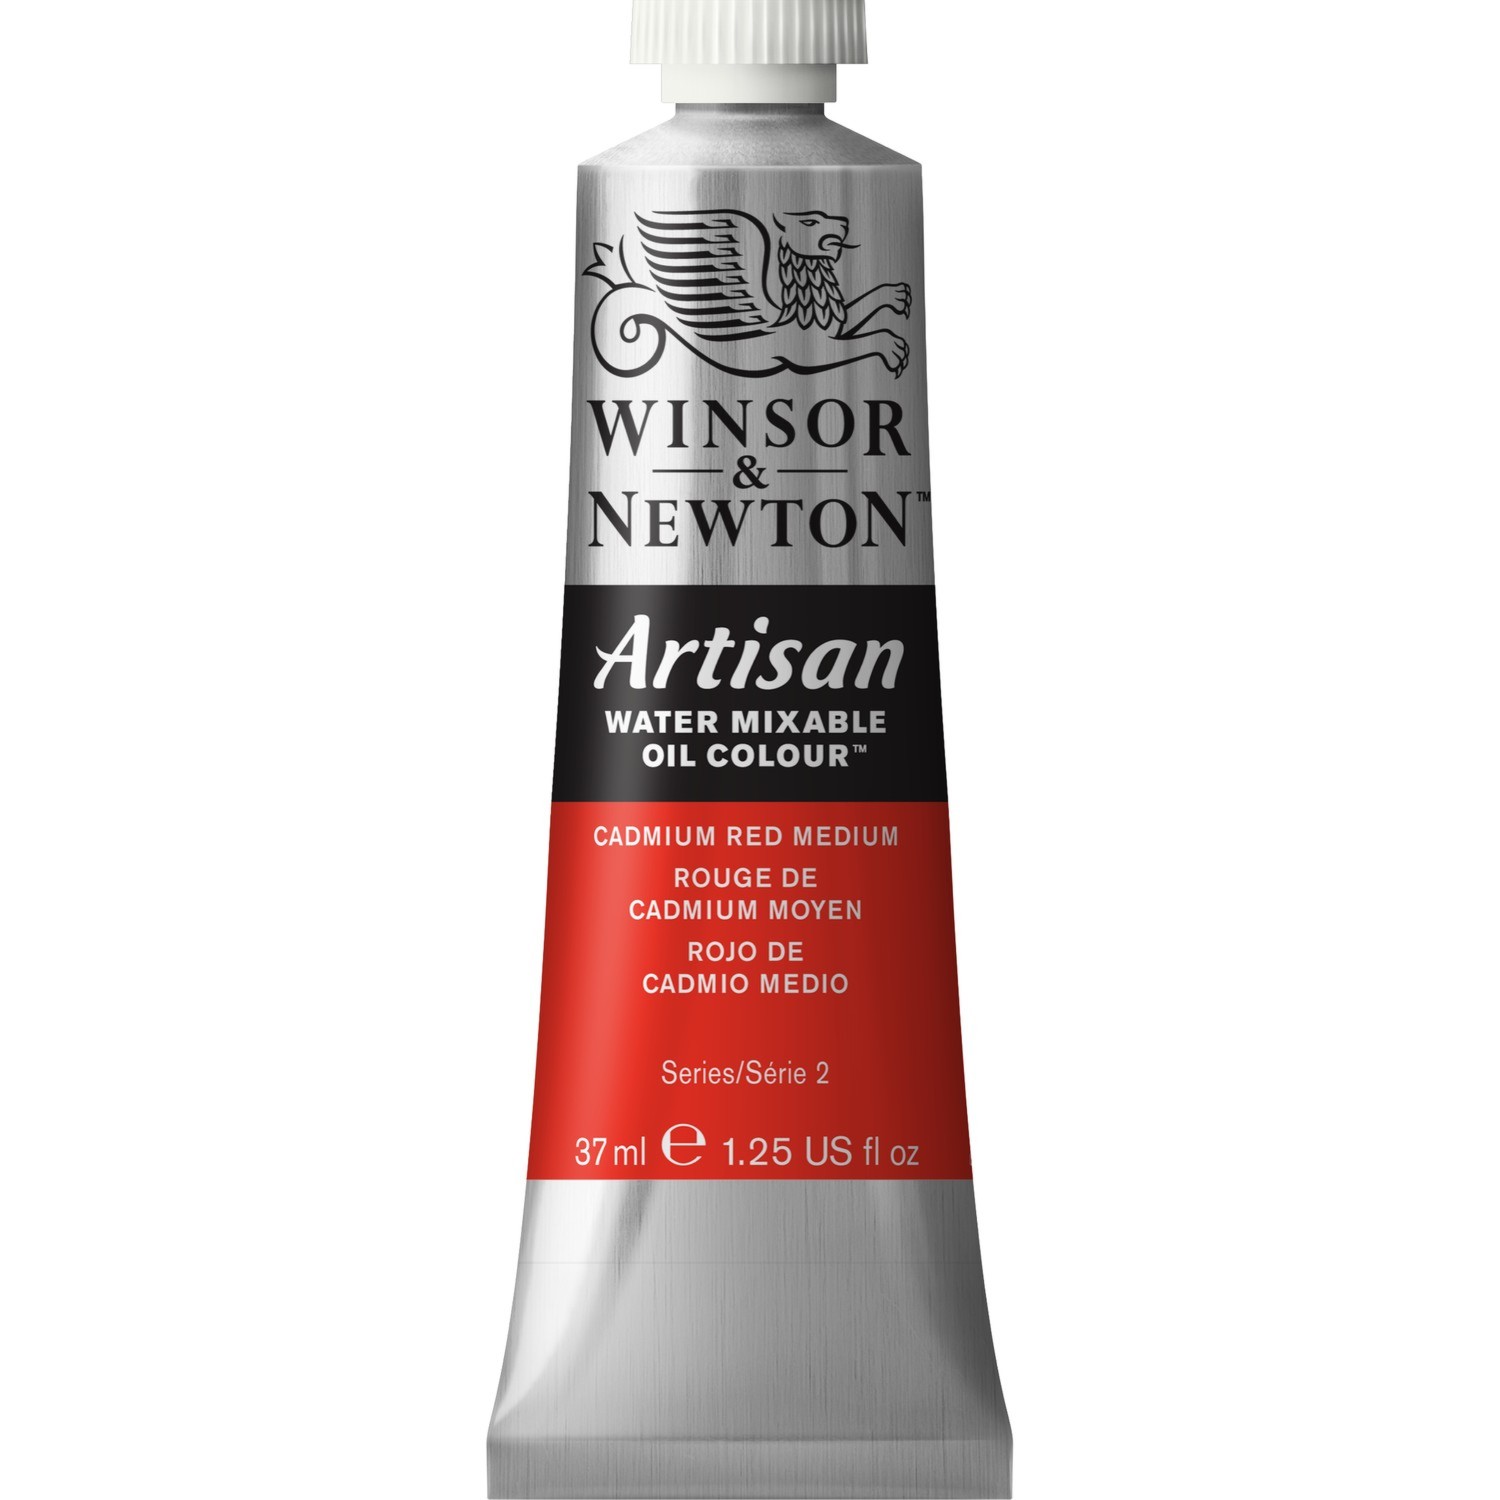 Winsor and Newton 37ml Artisan Mixable Oil Paint - Cadmium Medium Red Image 1